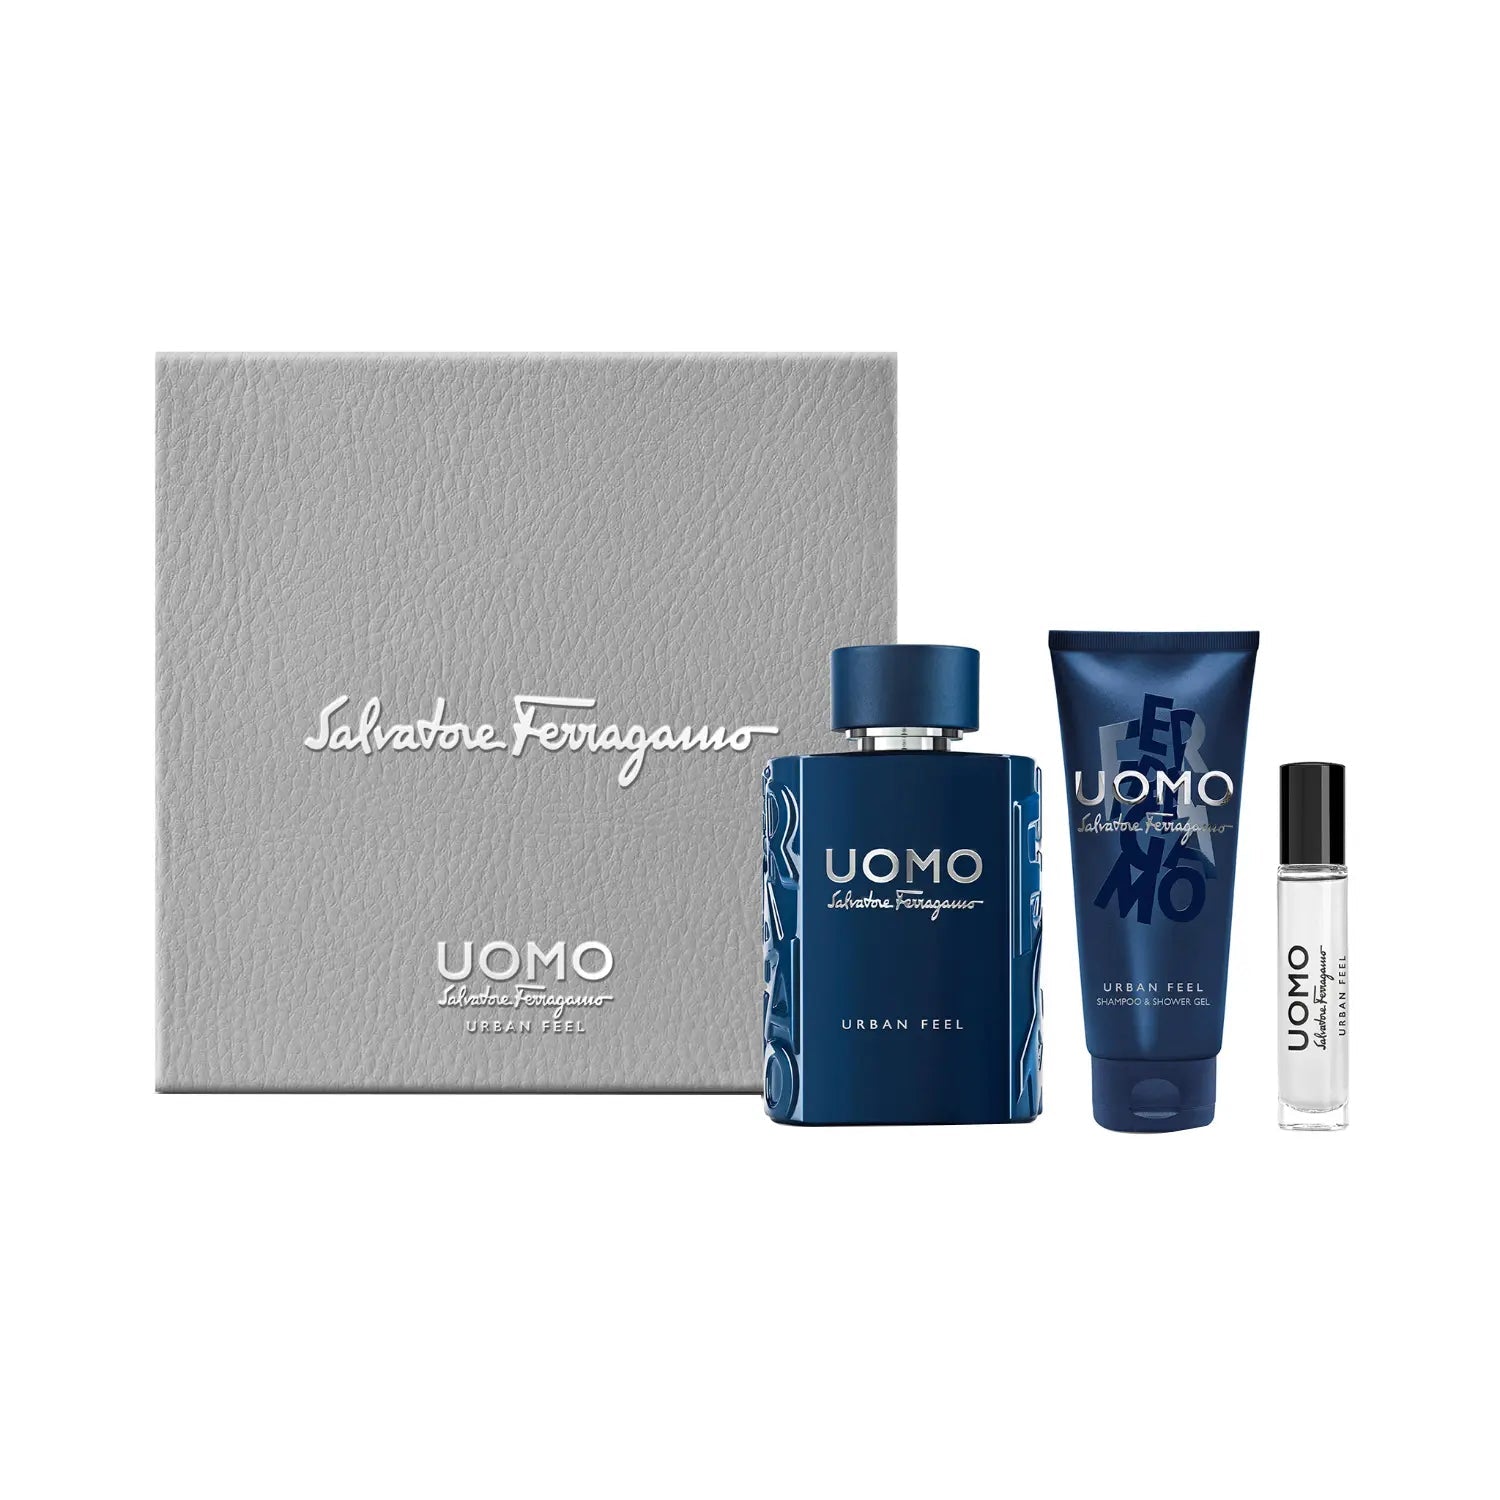 Salvatore Ferragamo Uomo Urban Feel EDT Set | My Perfume Shop Australia